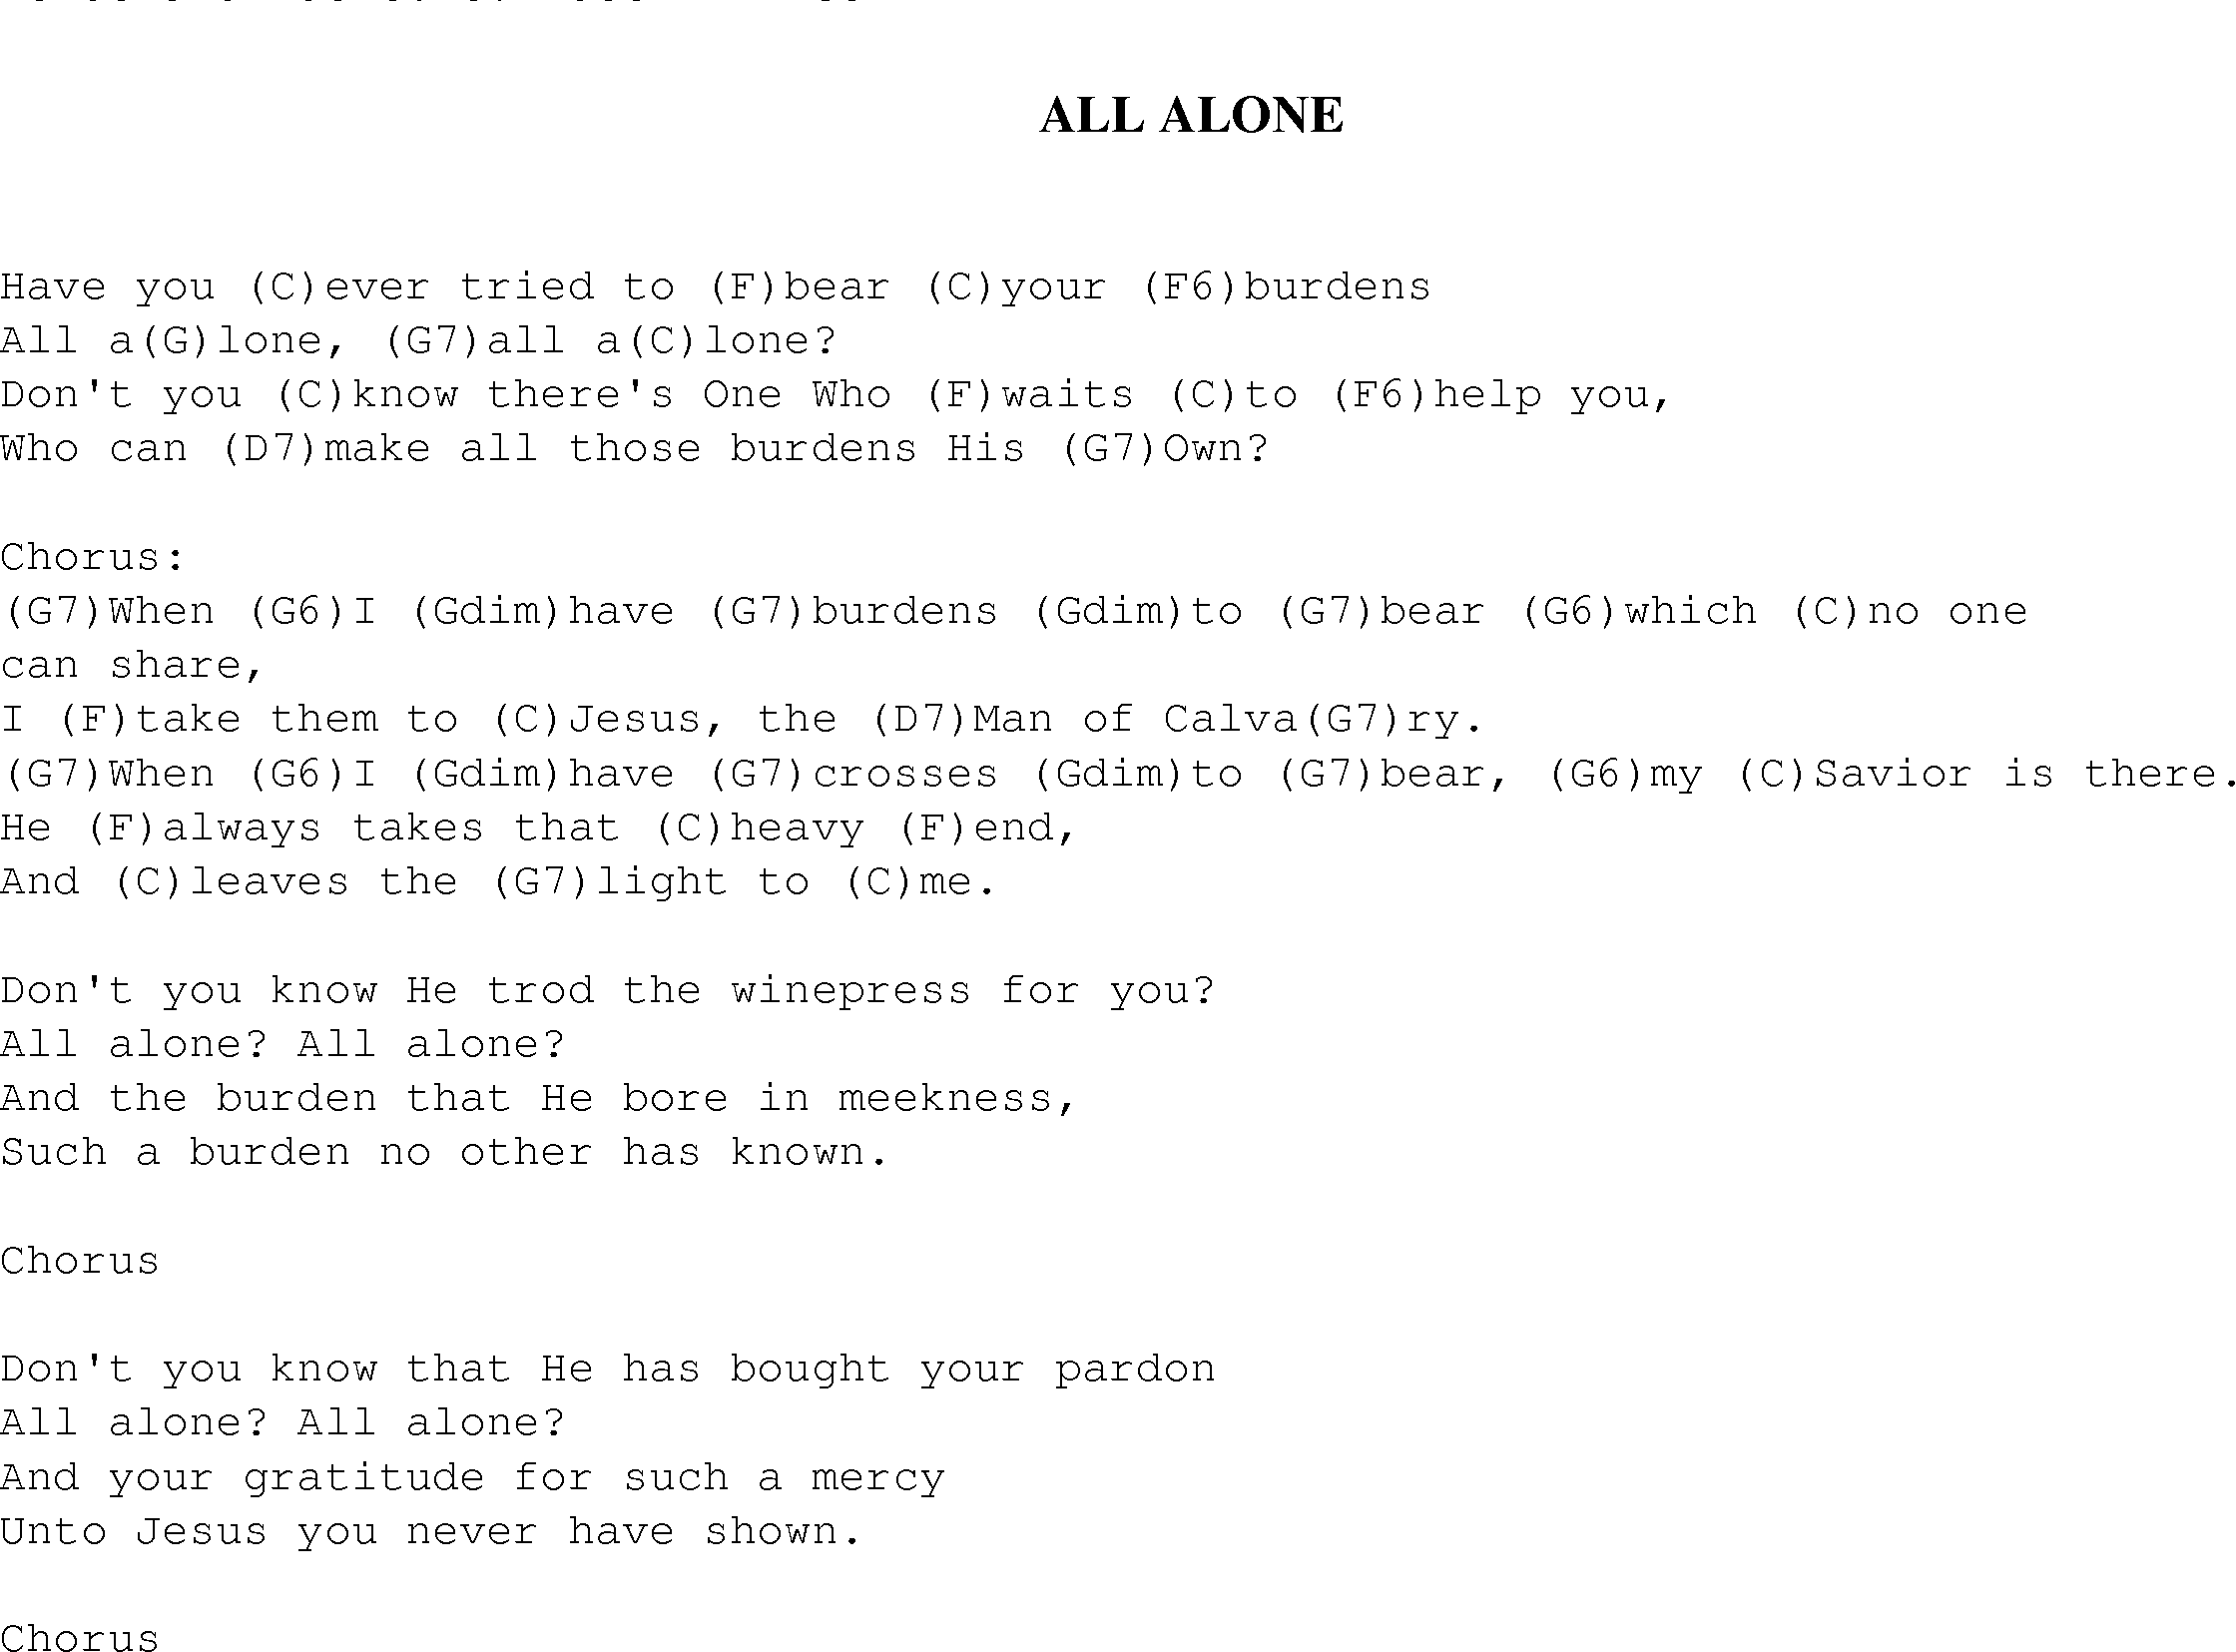 Gospel Song: all_alone, lyrics and chords.